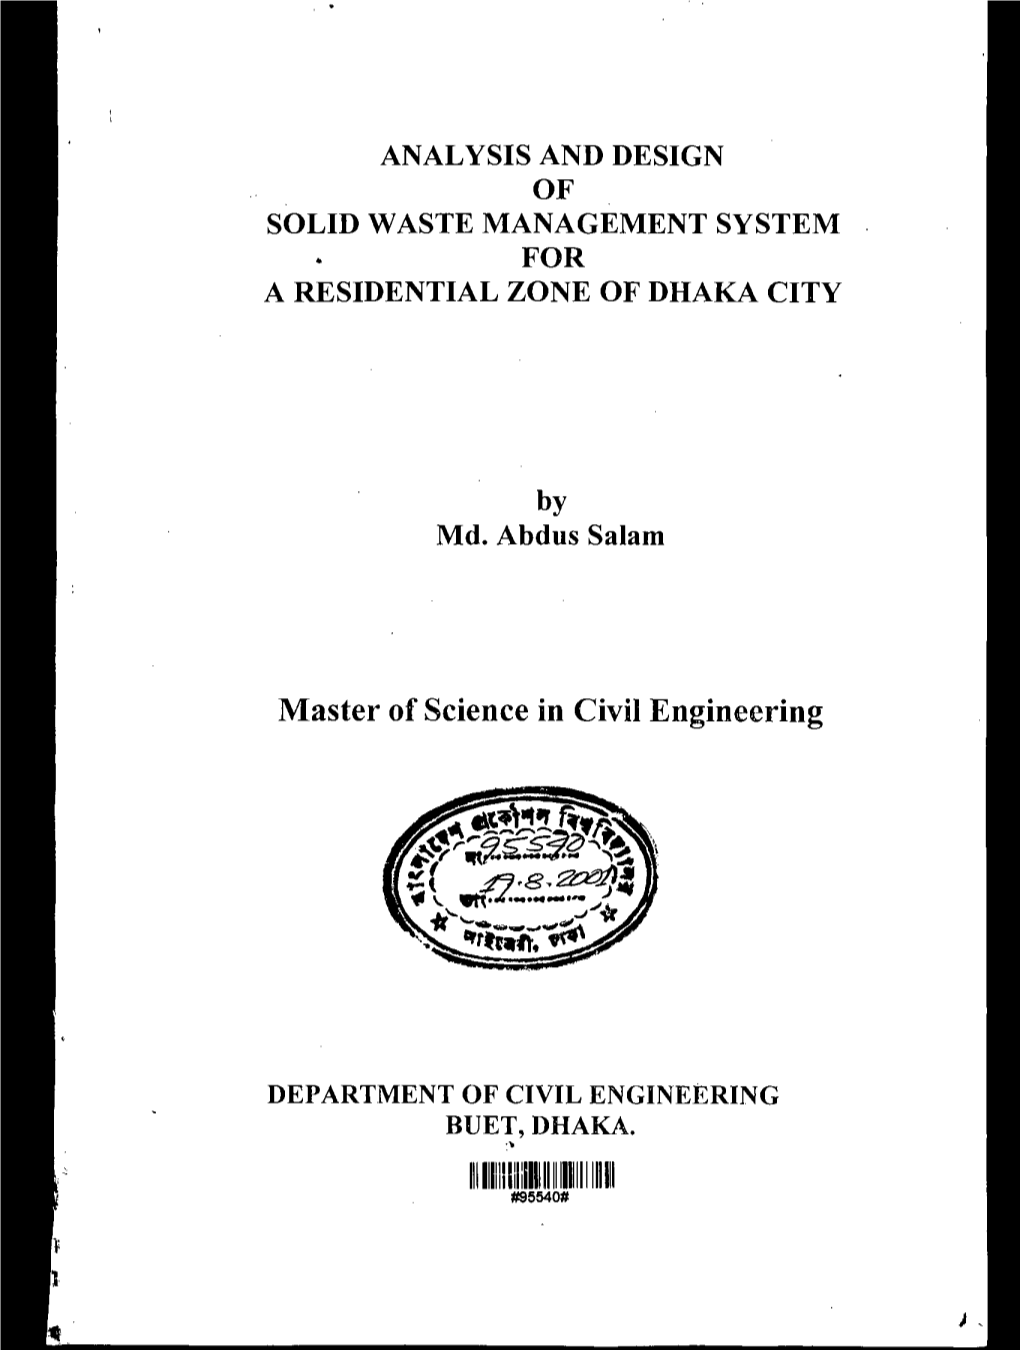 Master of Science in Civil Engineering